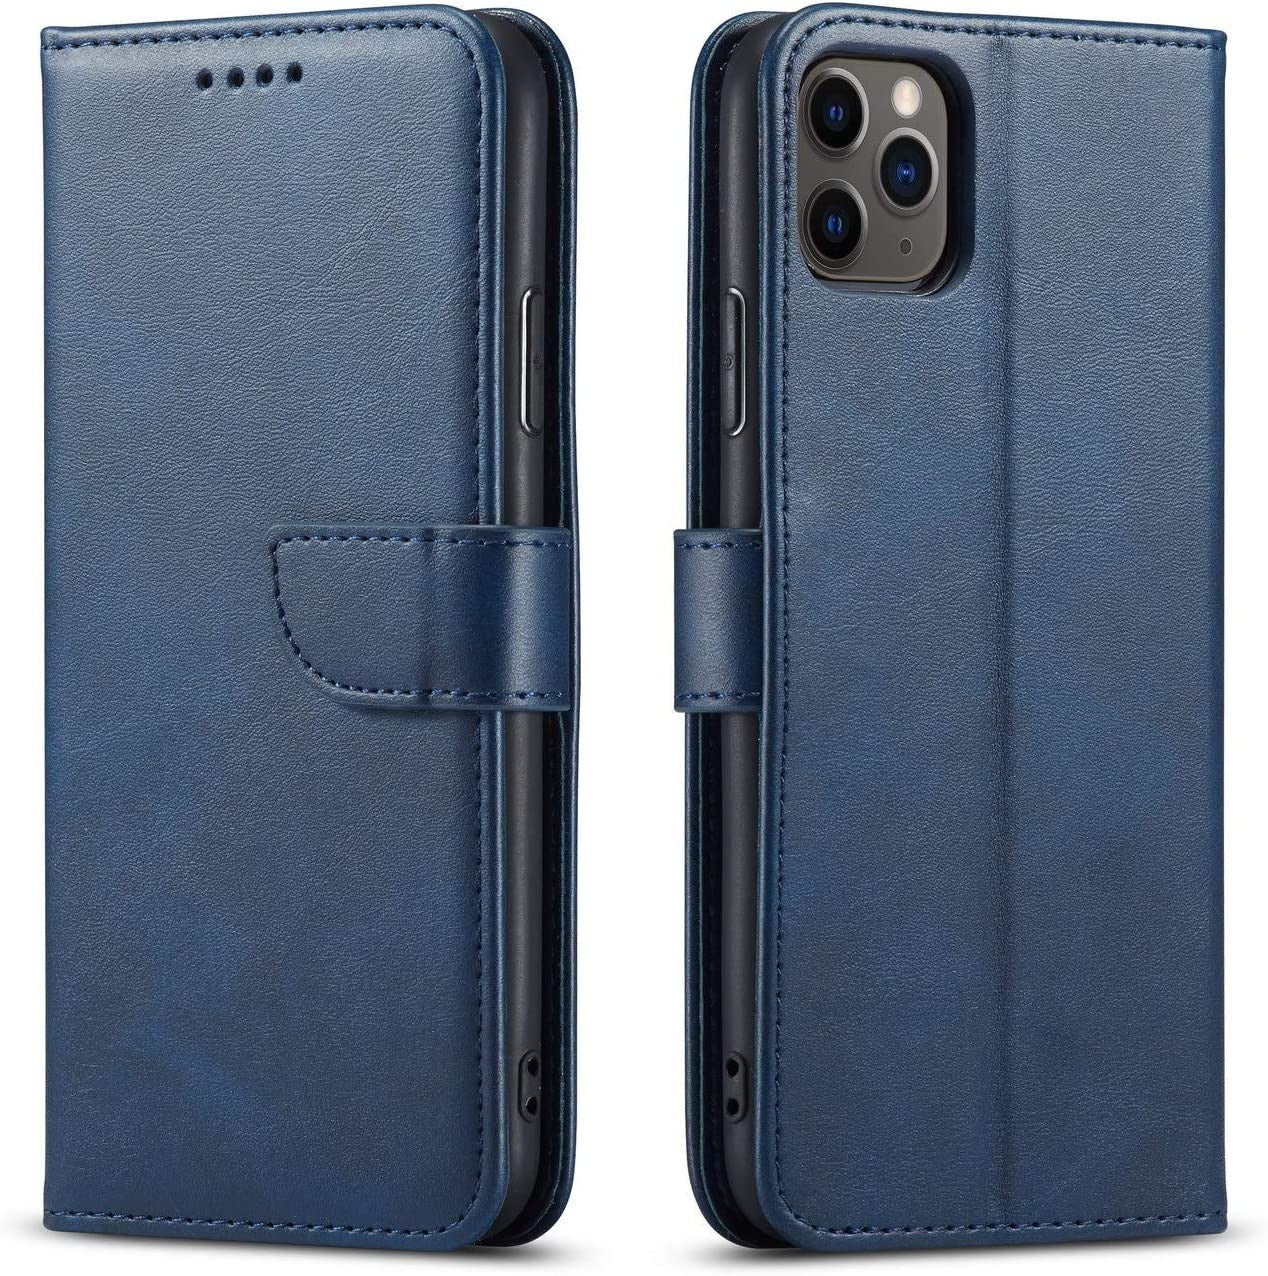 Ūmbris kaanega Wallet Case Samsung Galaxy S10 (tumesinine)